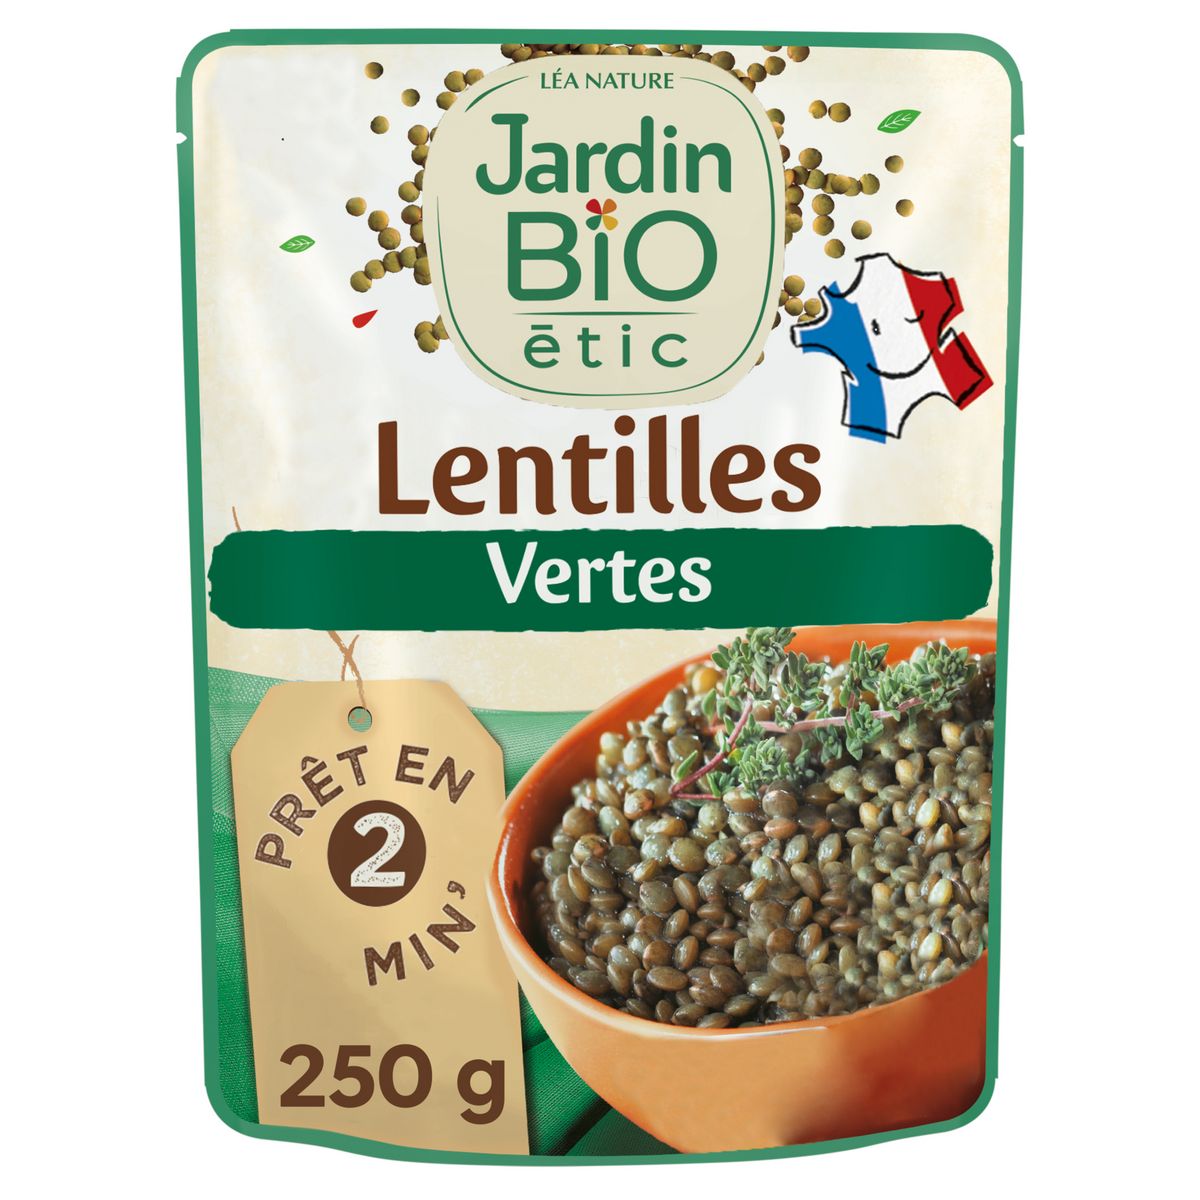 JARDIN BIO ETIC Lentilles vertes sachet express 260g